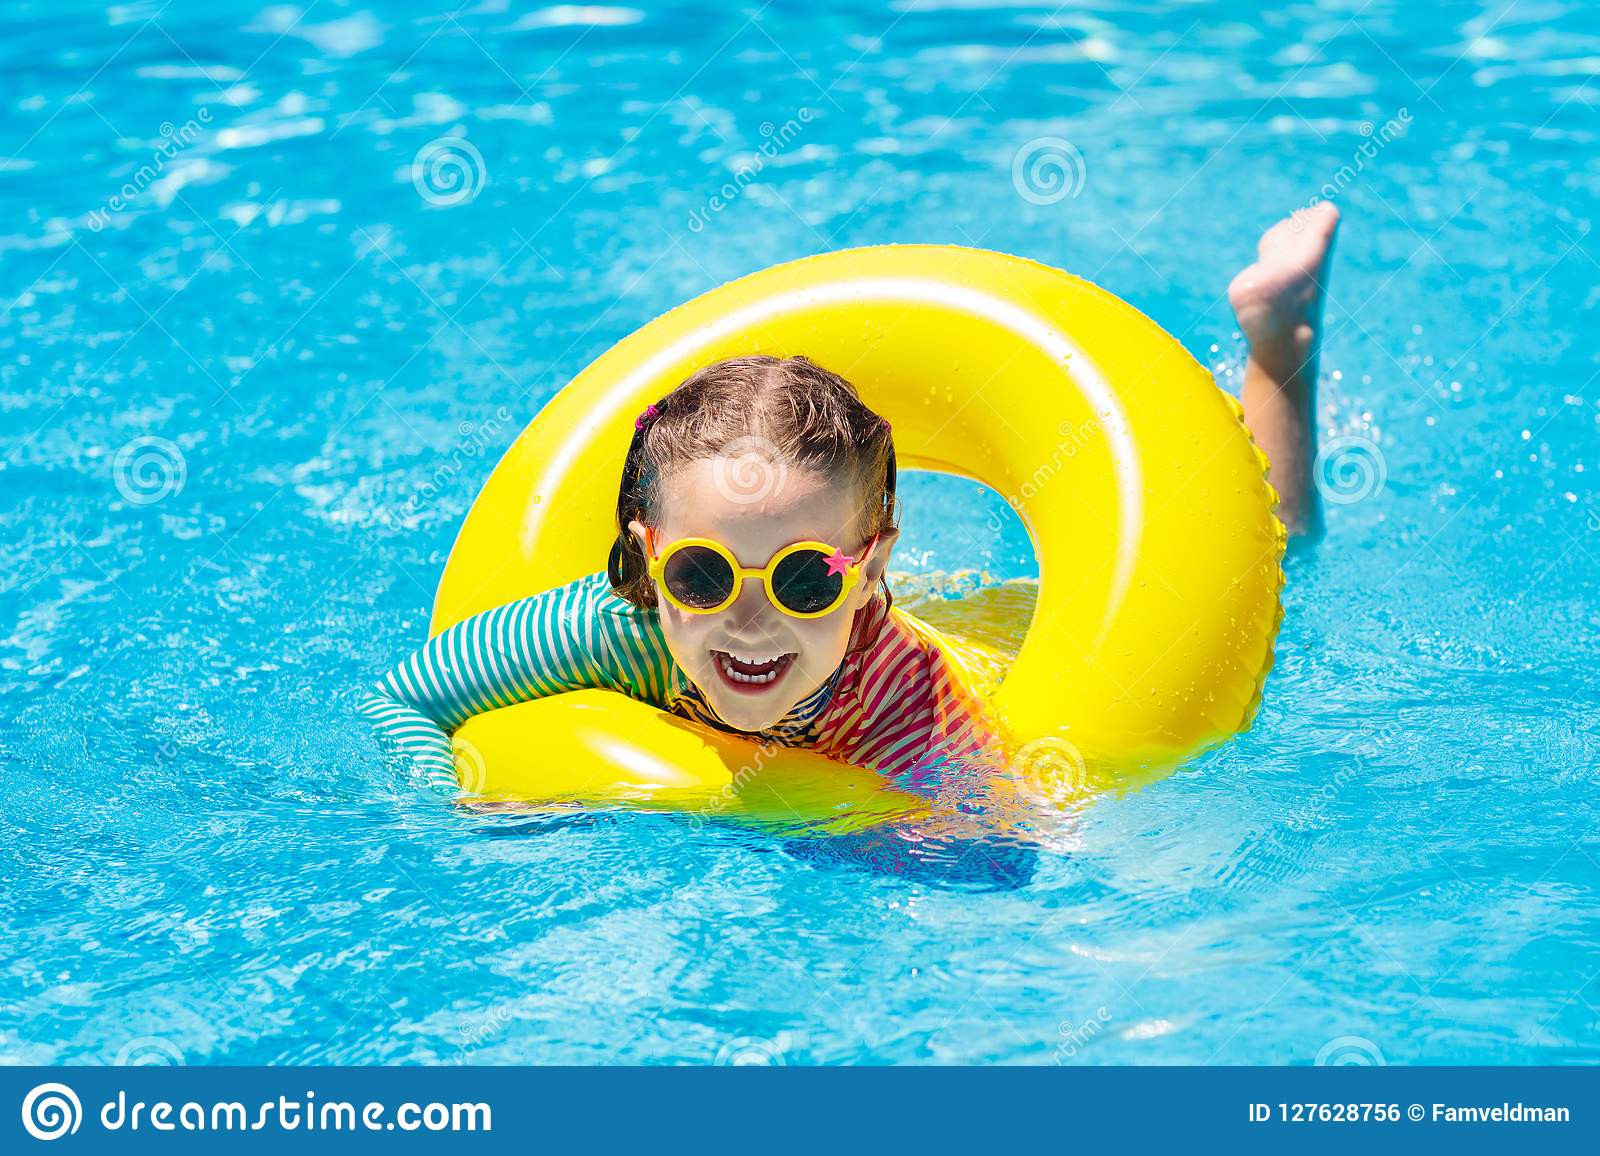 Kids Outdoor Swimming Pool
 Child In Swimming Pool Kids Swim Water Play Stock